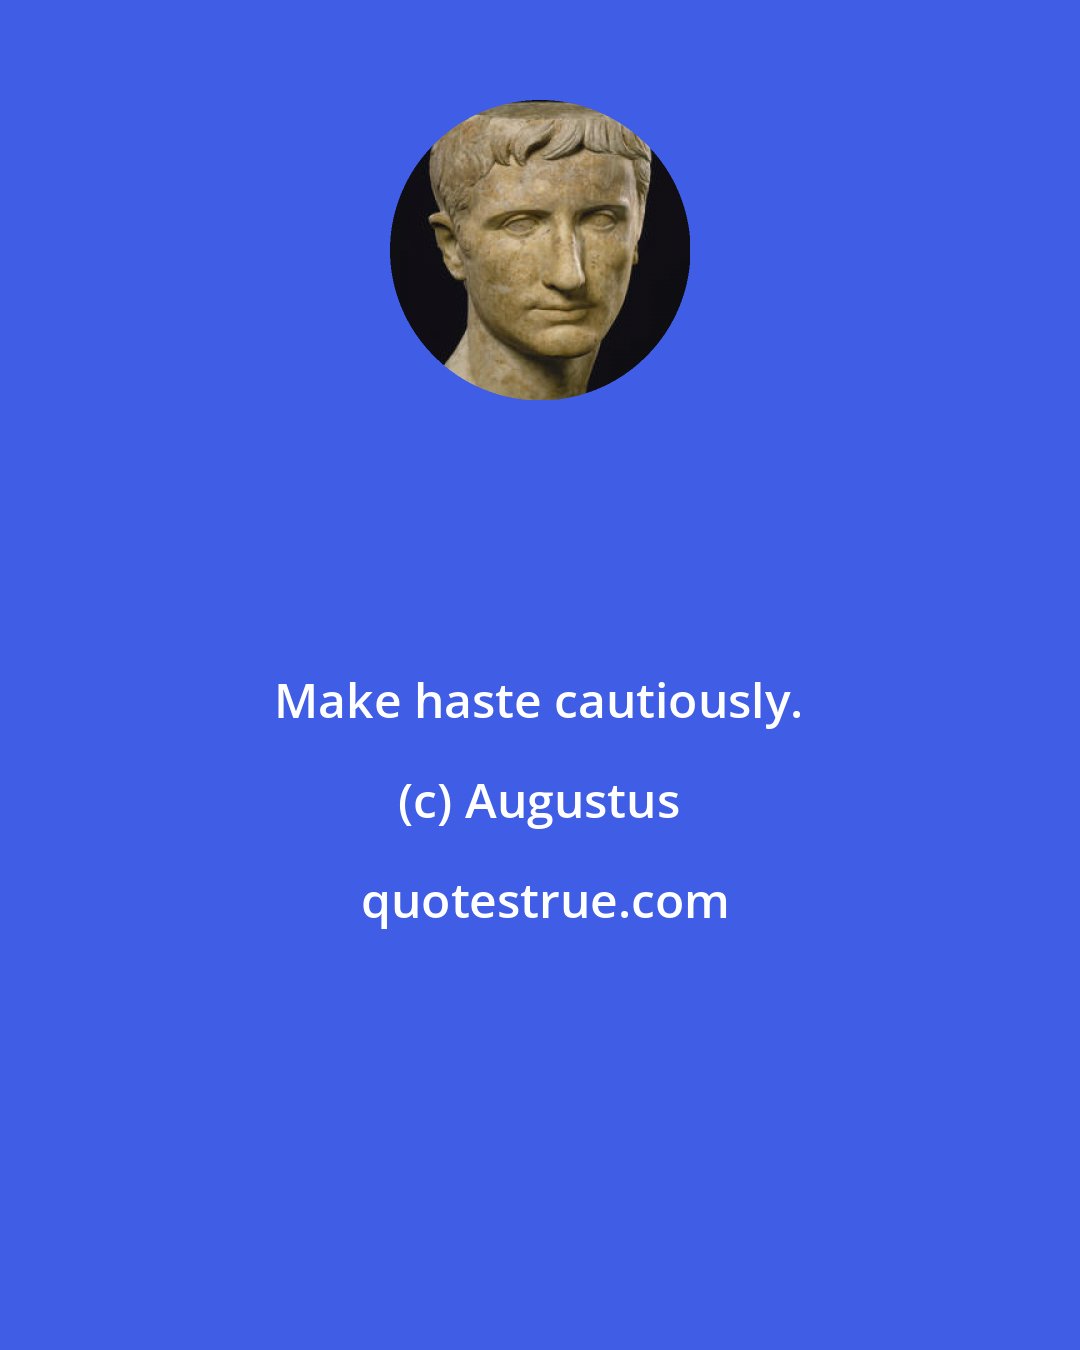 Augustus: Make haste cautiously.